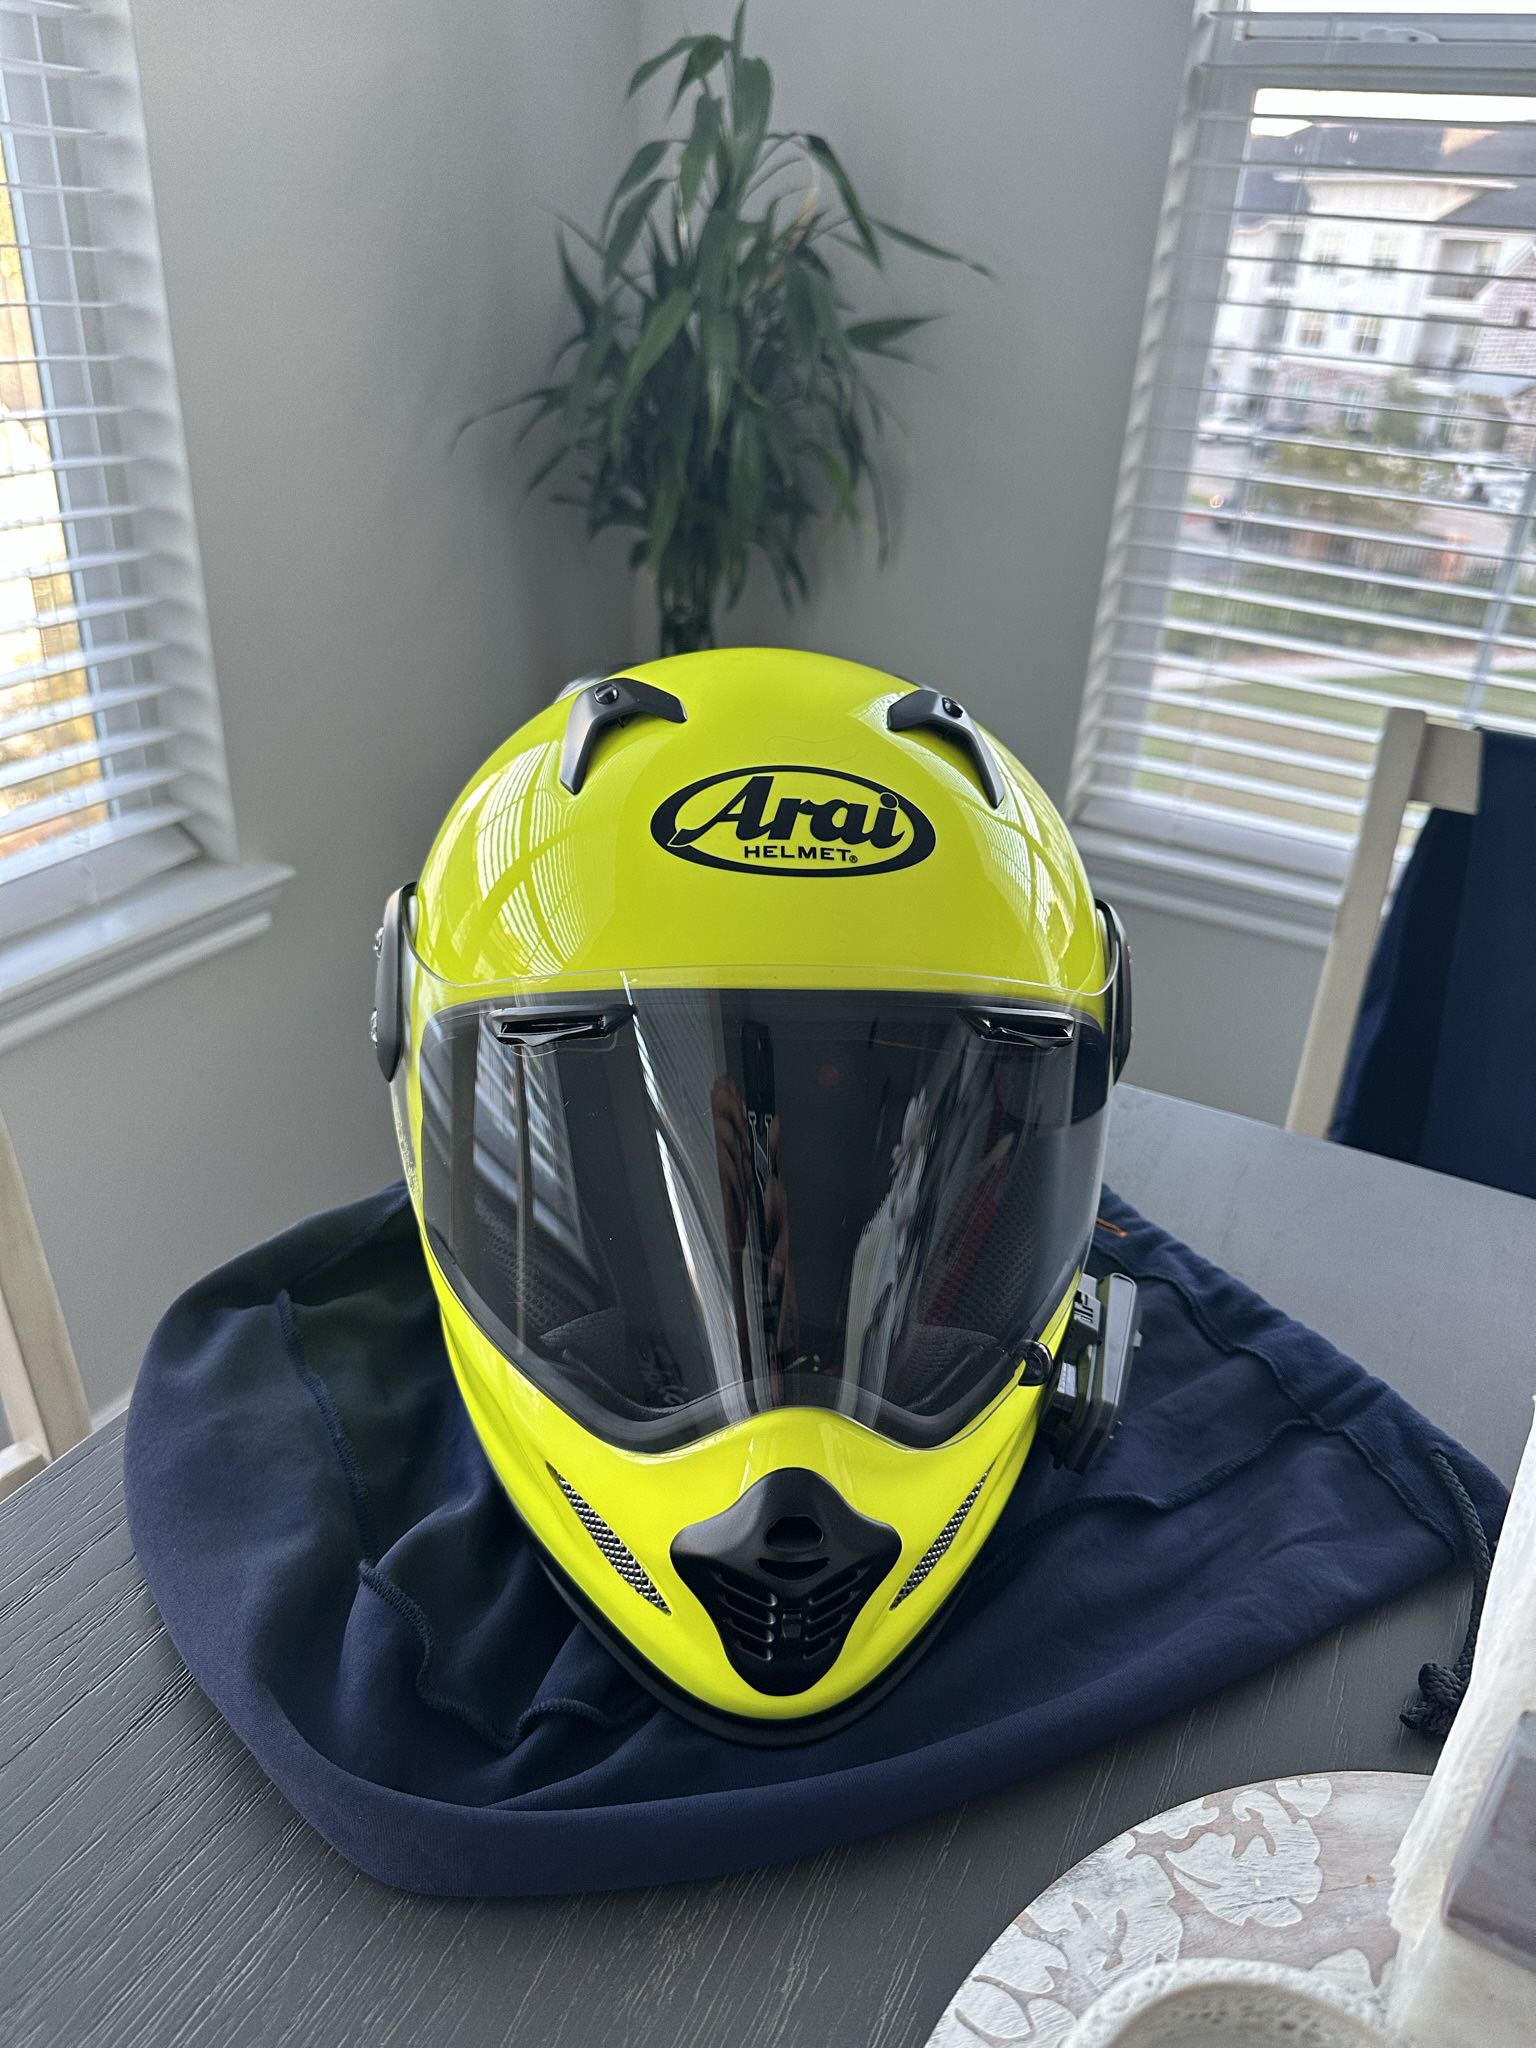 Arai XD4 Hi-viz Helmet & Cardo Packtalk Edge $1100 RETAIL FOR LOW